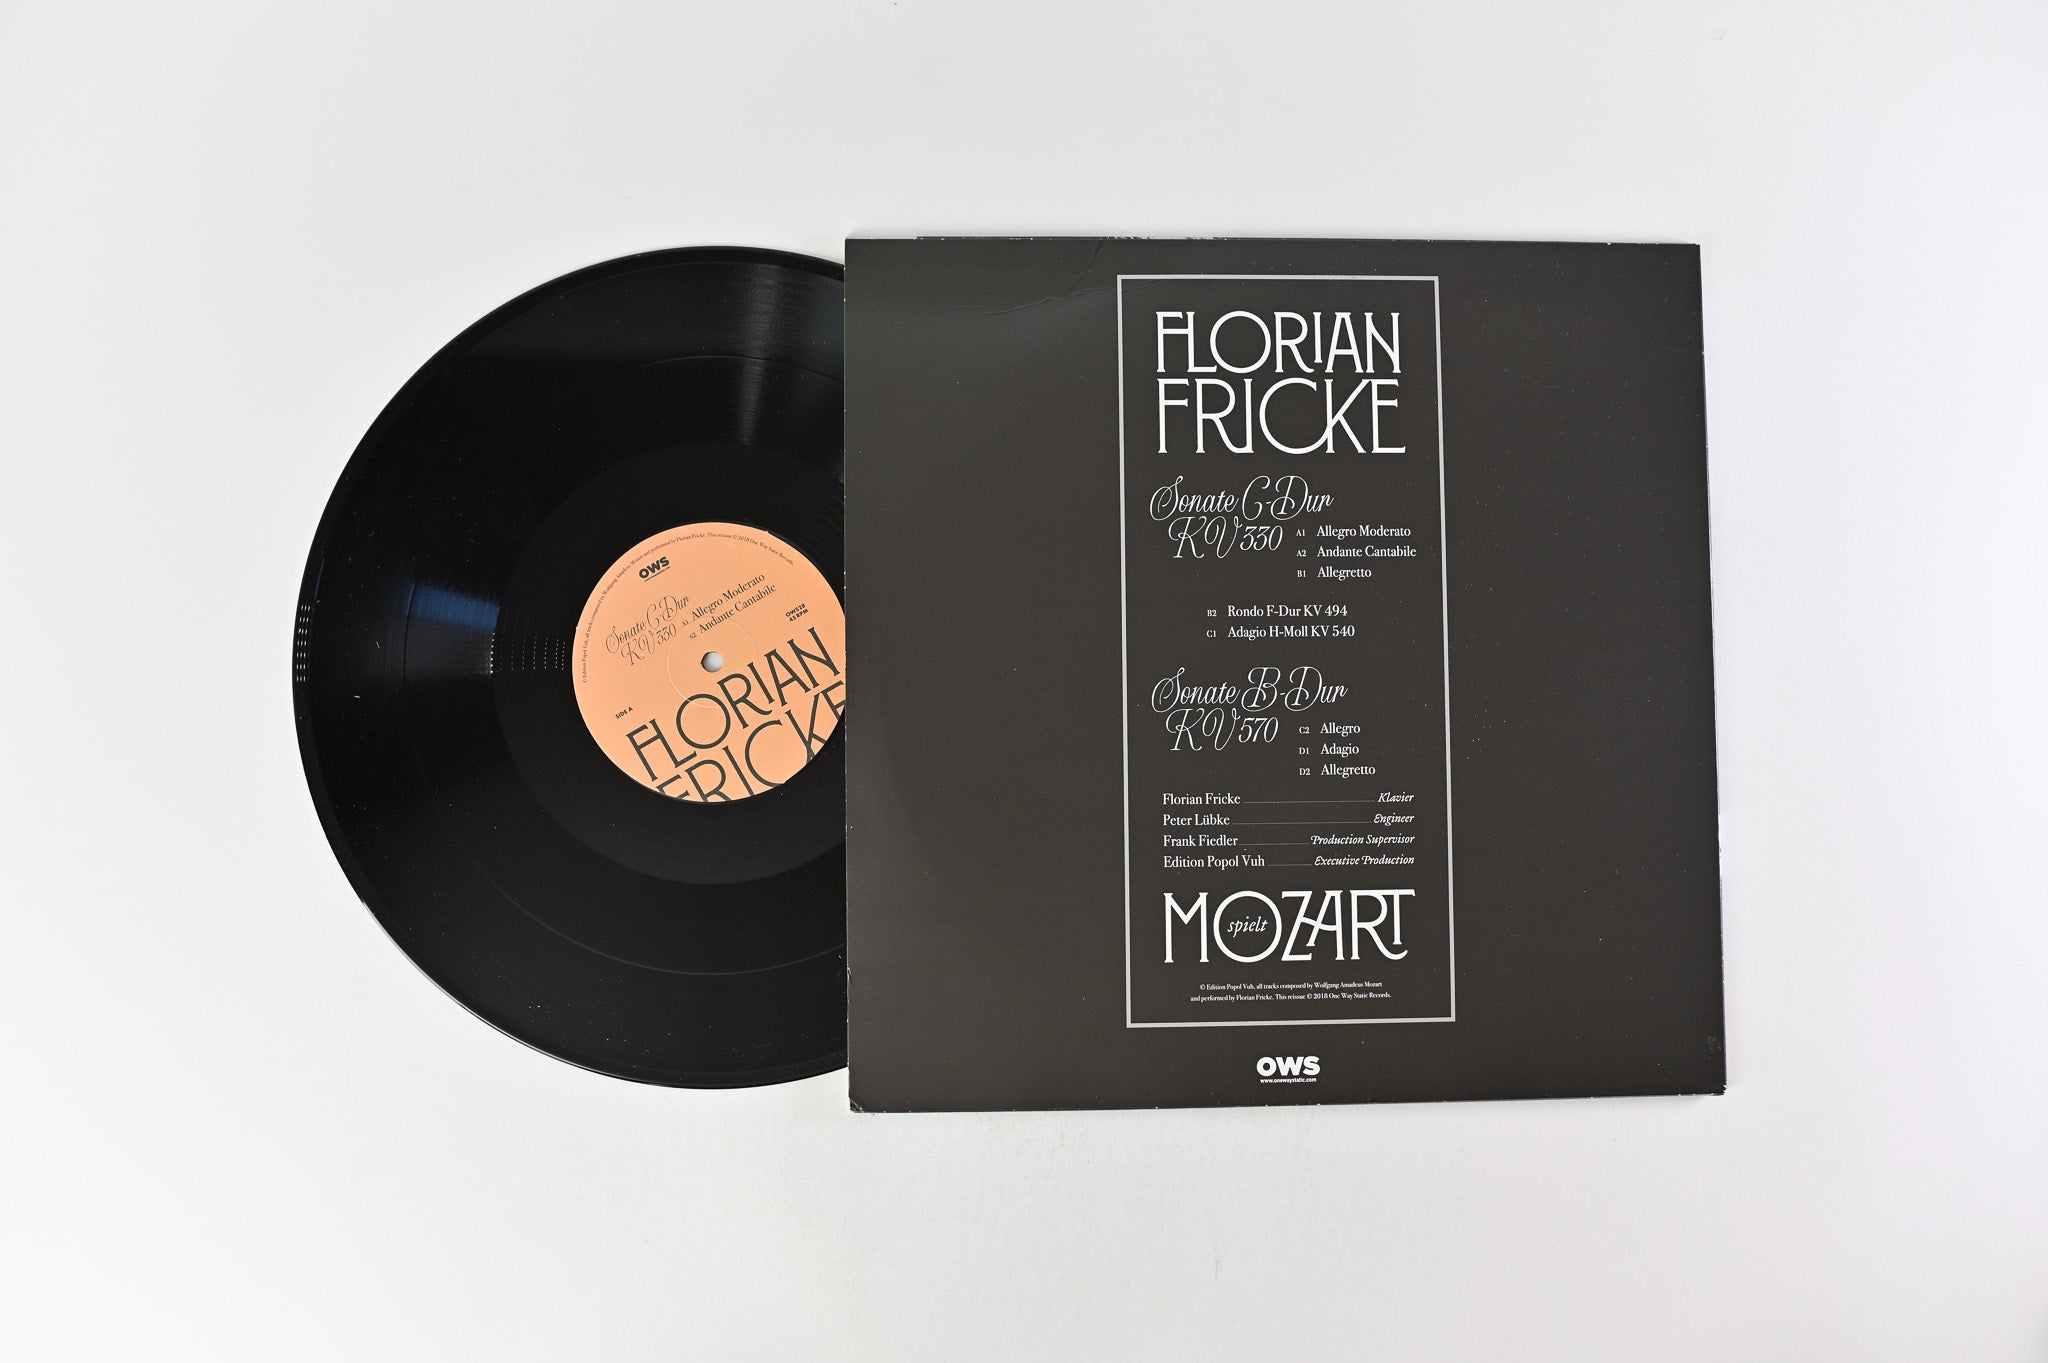 Florian Fricke - Spielt Mozart on One Way Static Records